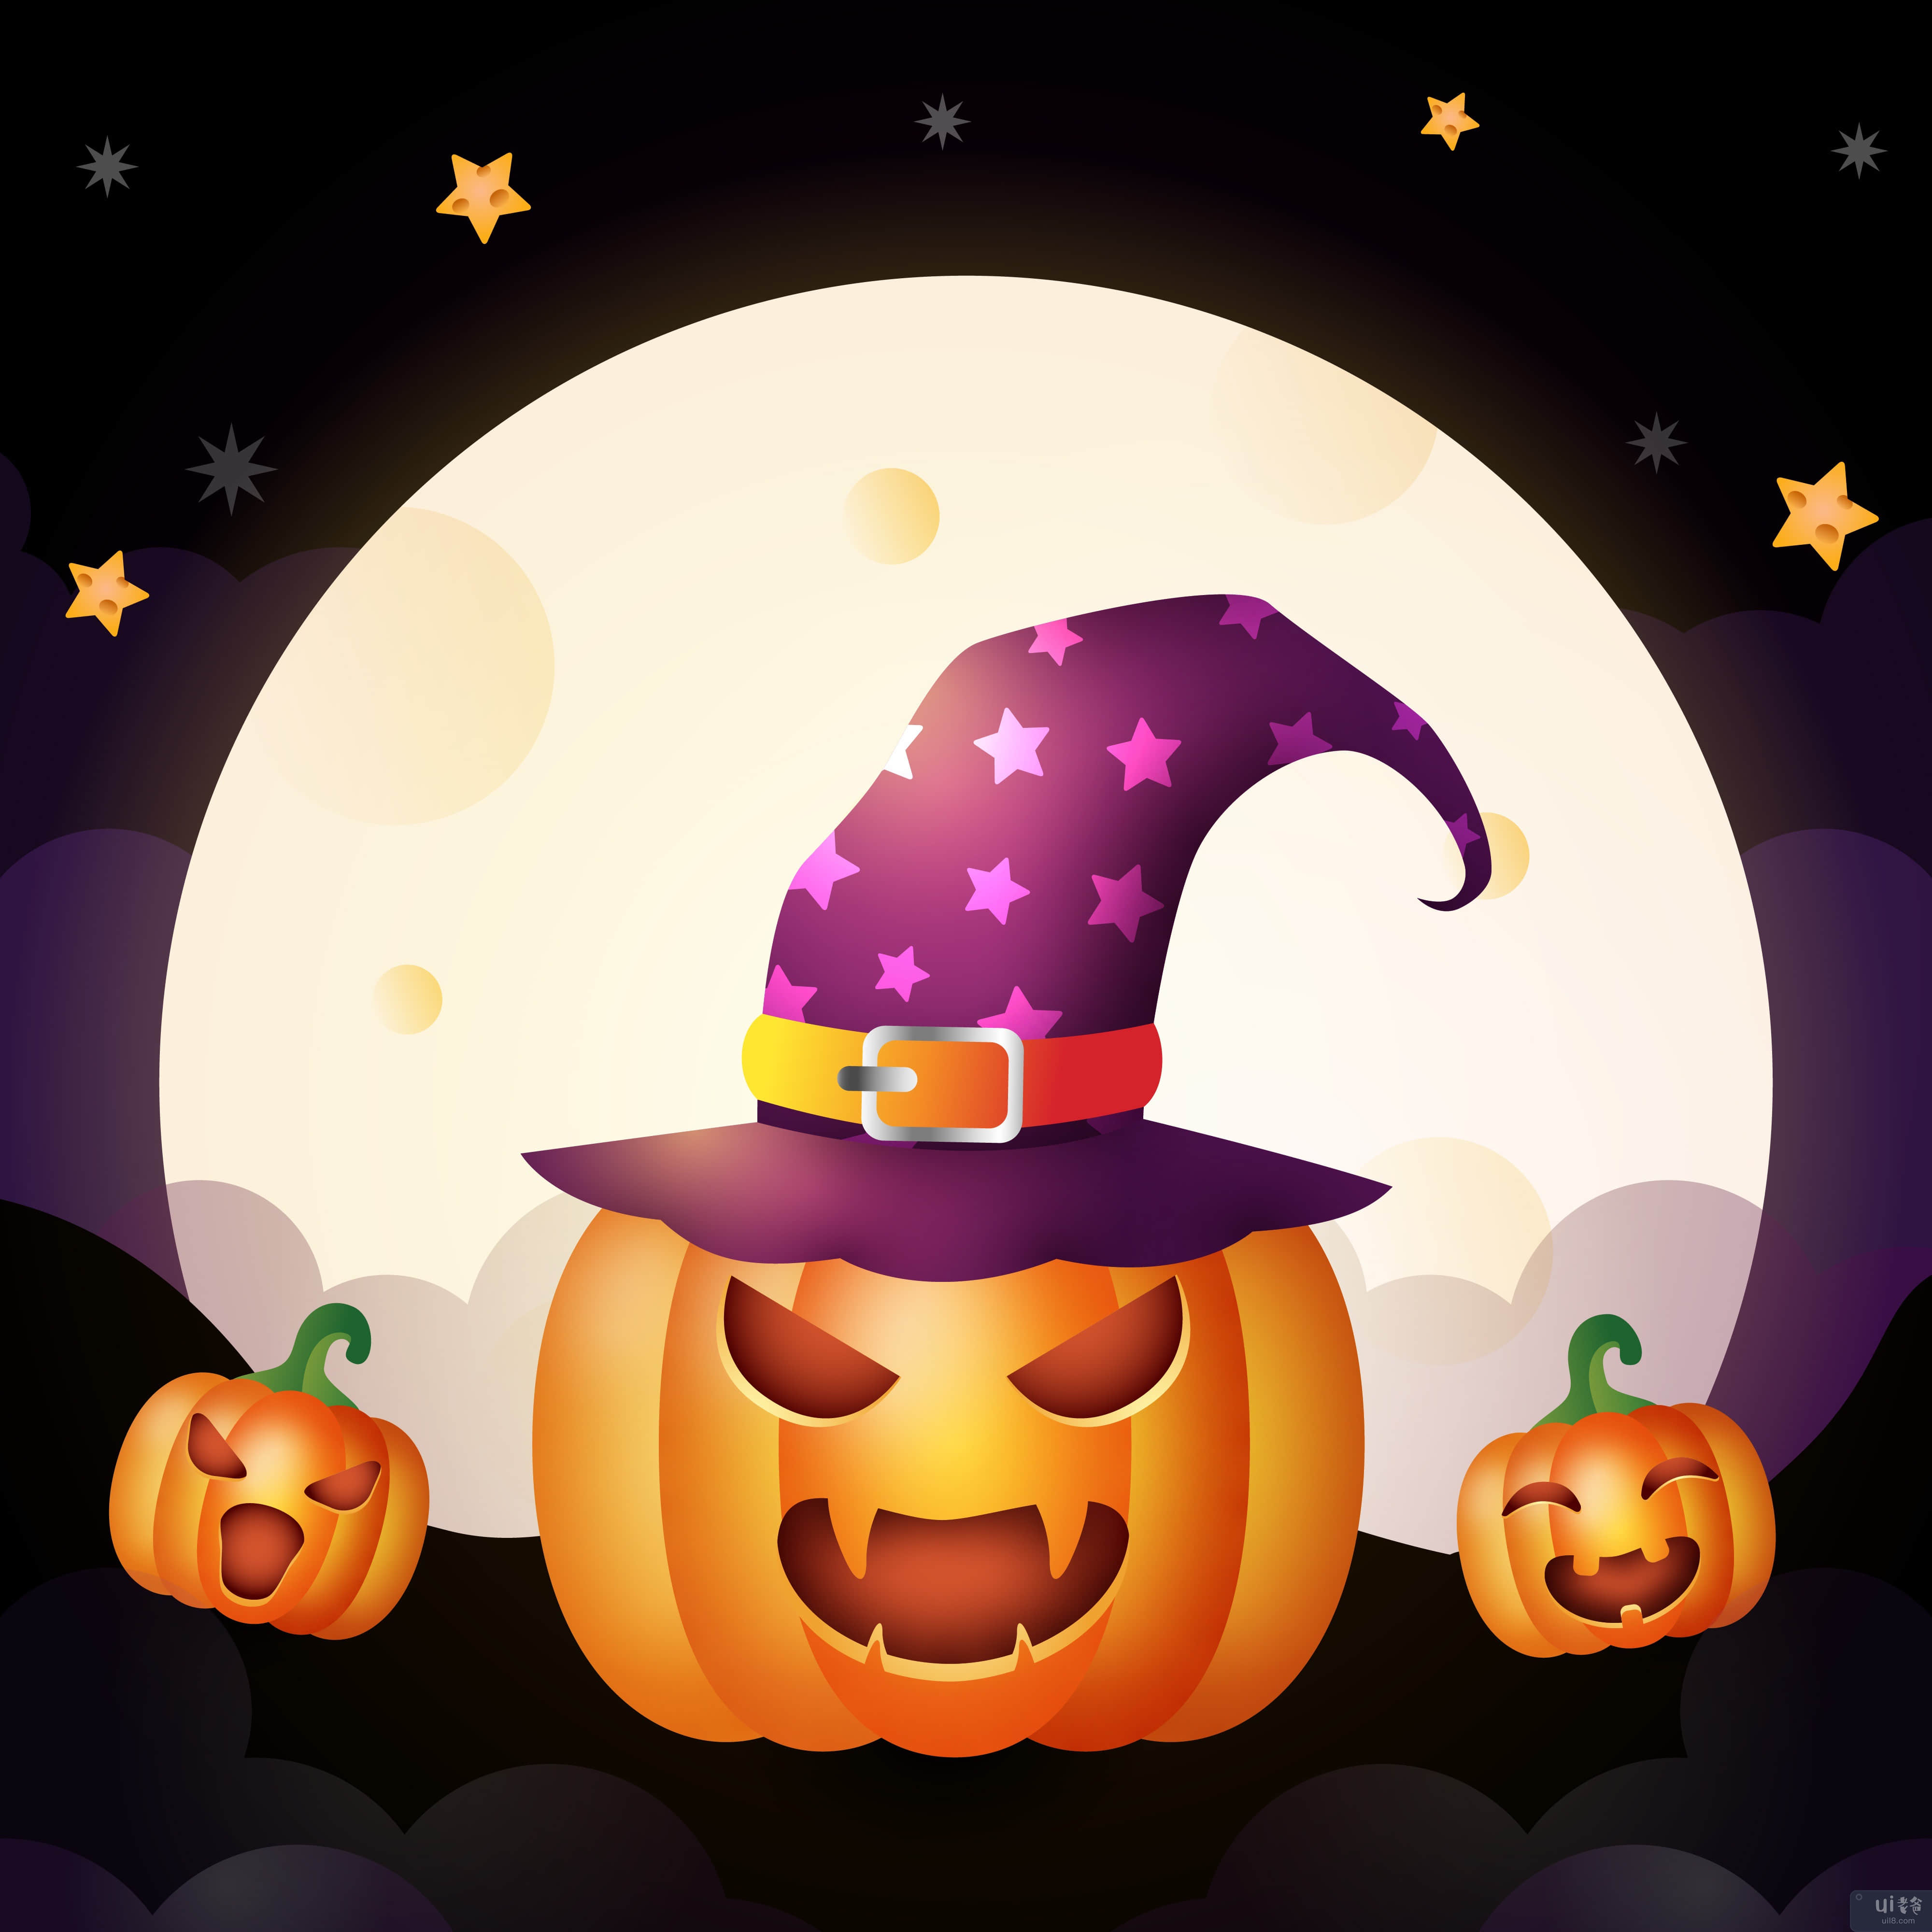 万圣节南瓜用女巫帽站在月球前的地面上(halloween pumpkin using witch hat stand on ground front the moon)插图